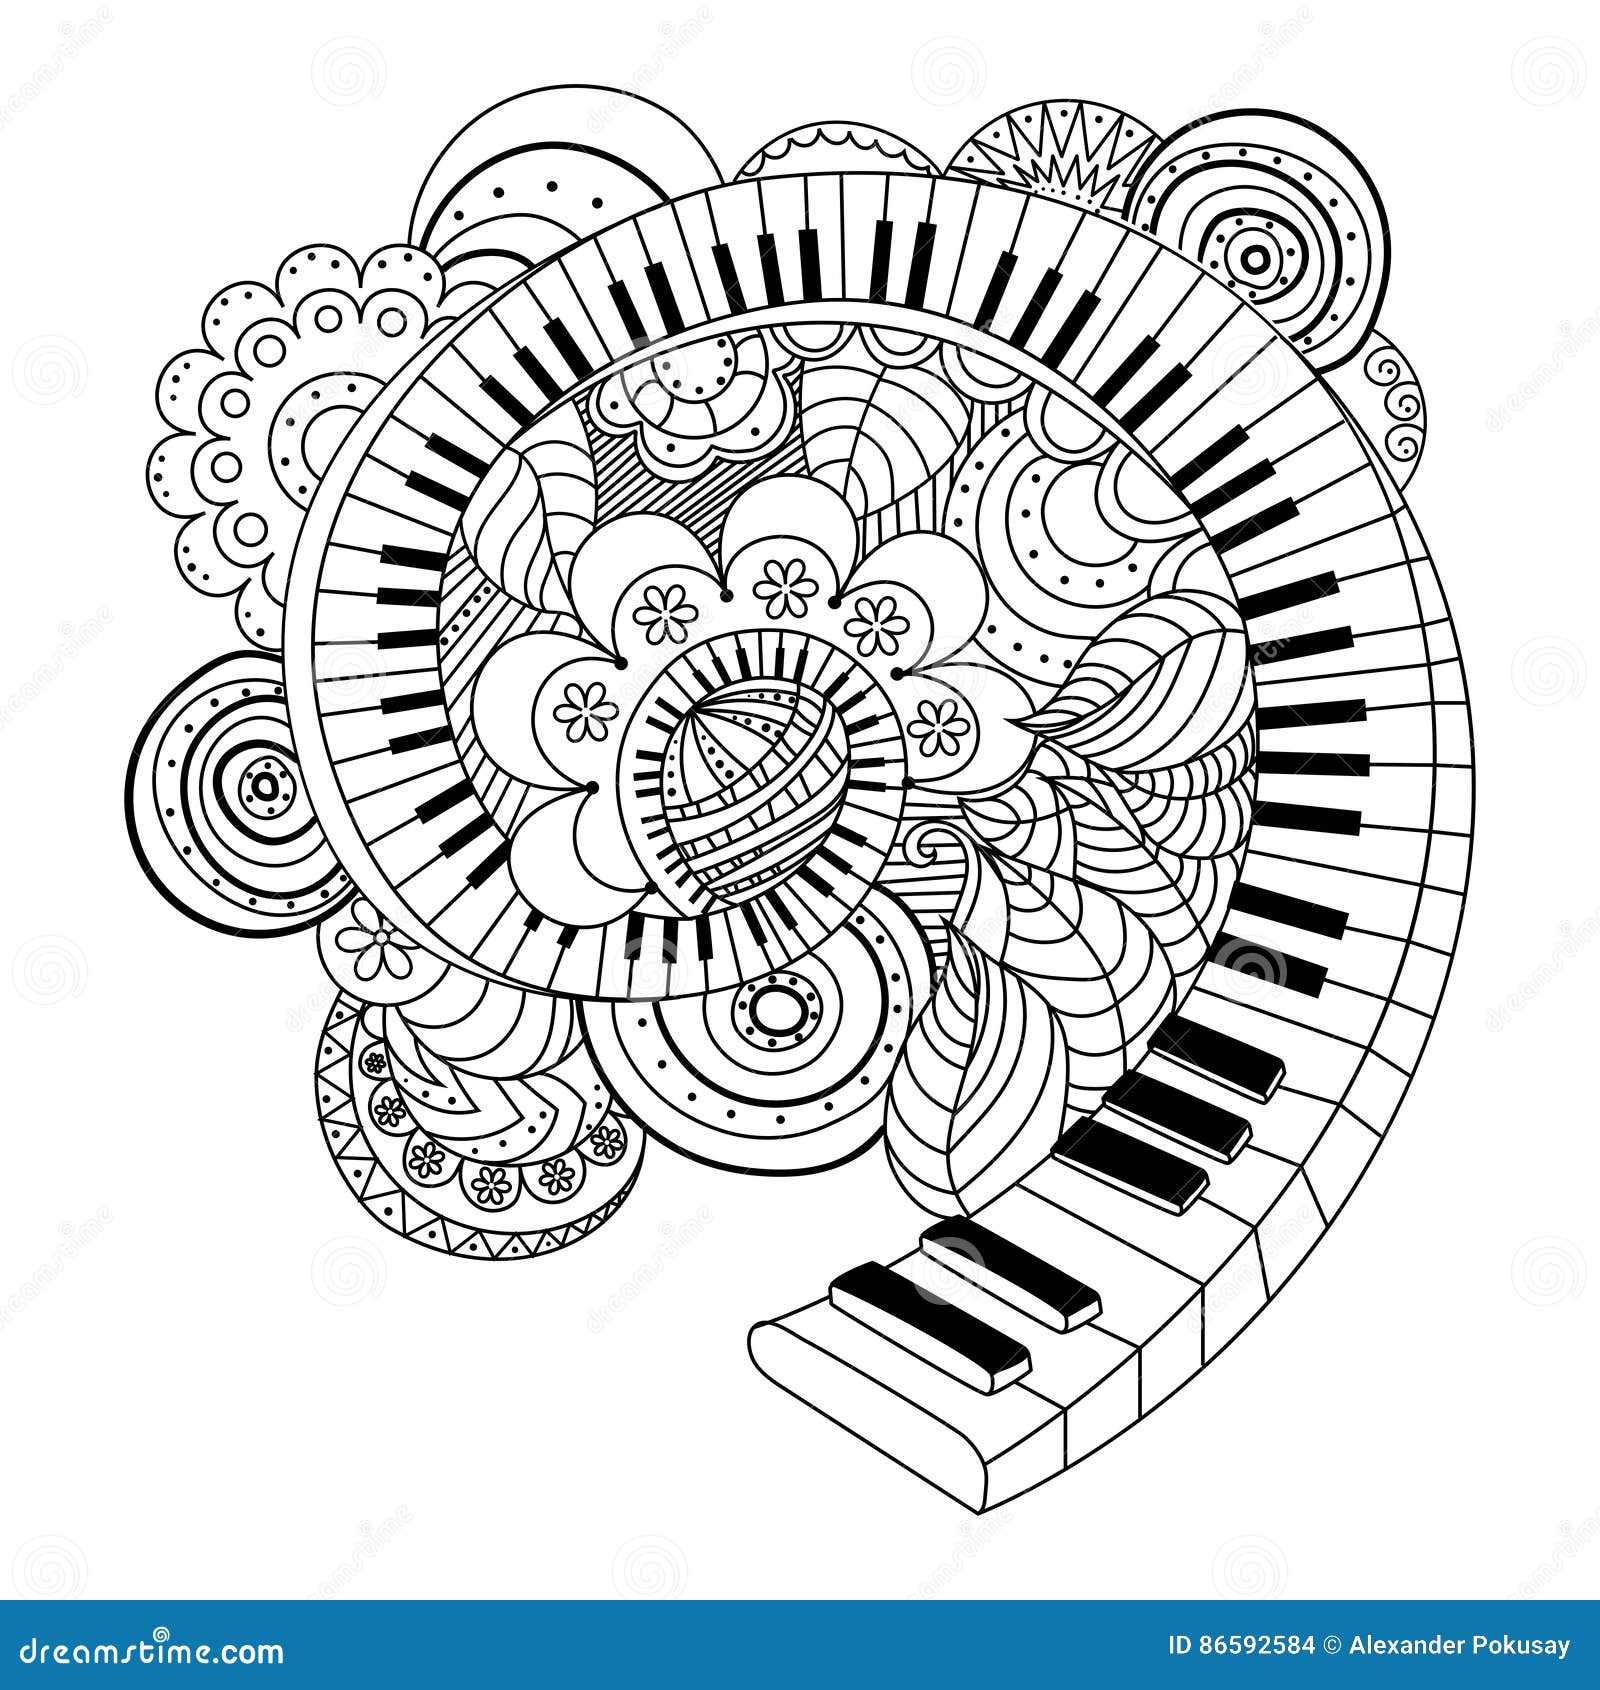 Coloring music key stock illustrations â coloring music key stock illustrations vectors clipart